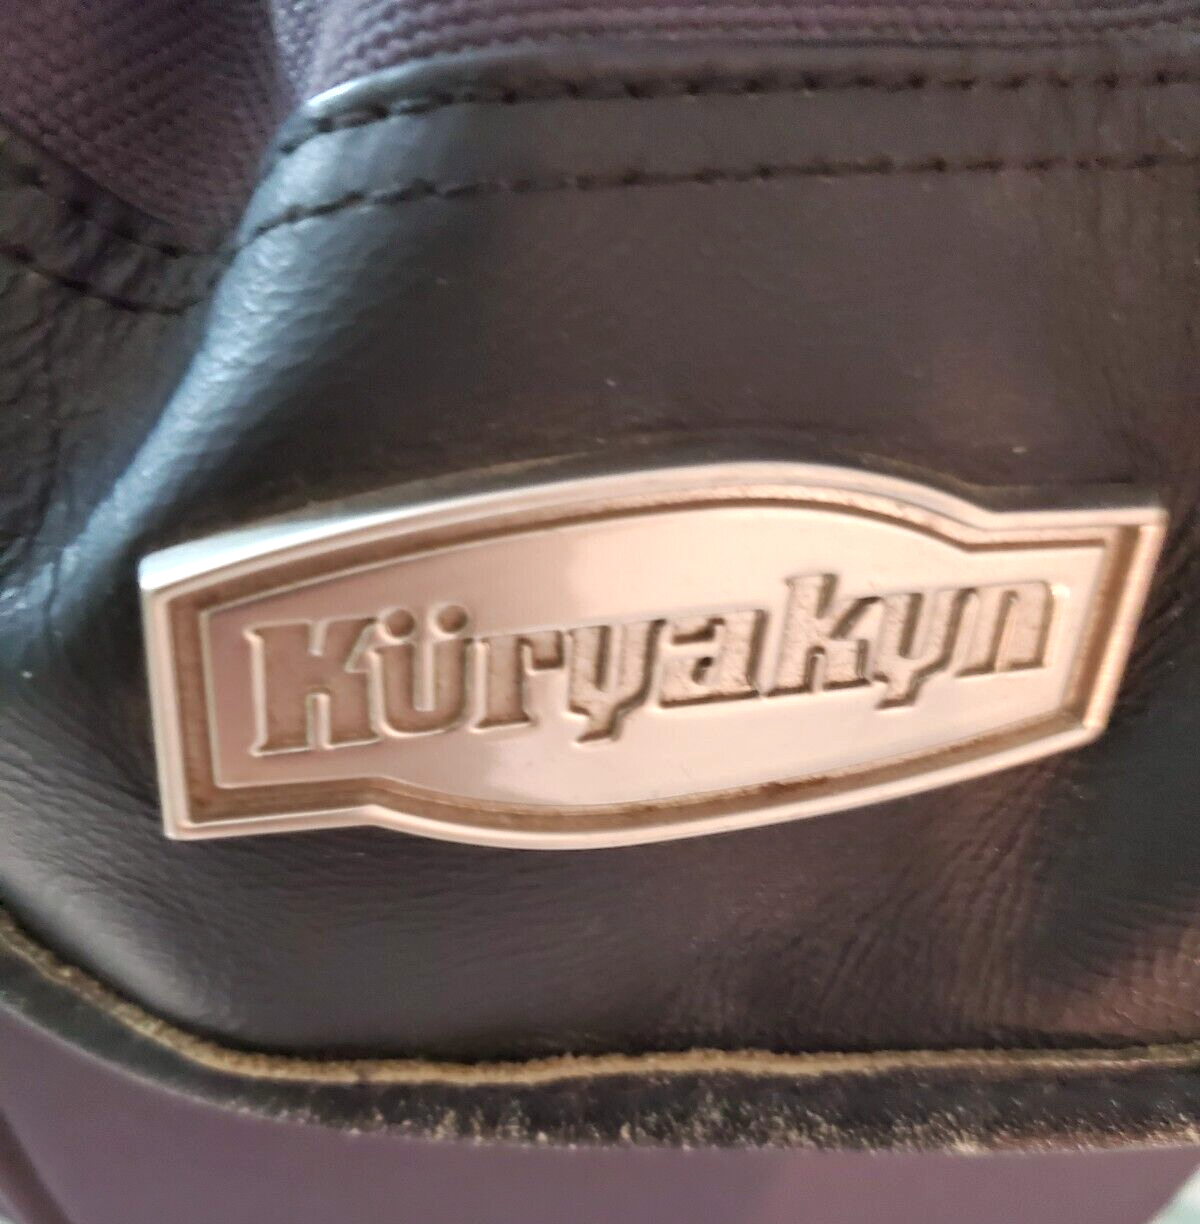  Saddle Bag Throw Over Luggage Gear for Motorcycle/ Black Canvas/Brand: Kuryakyn - $89.99